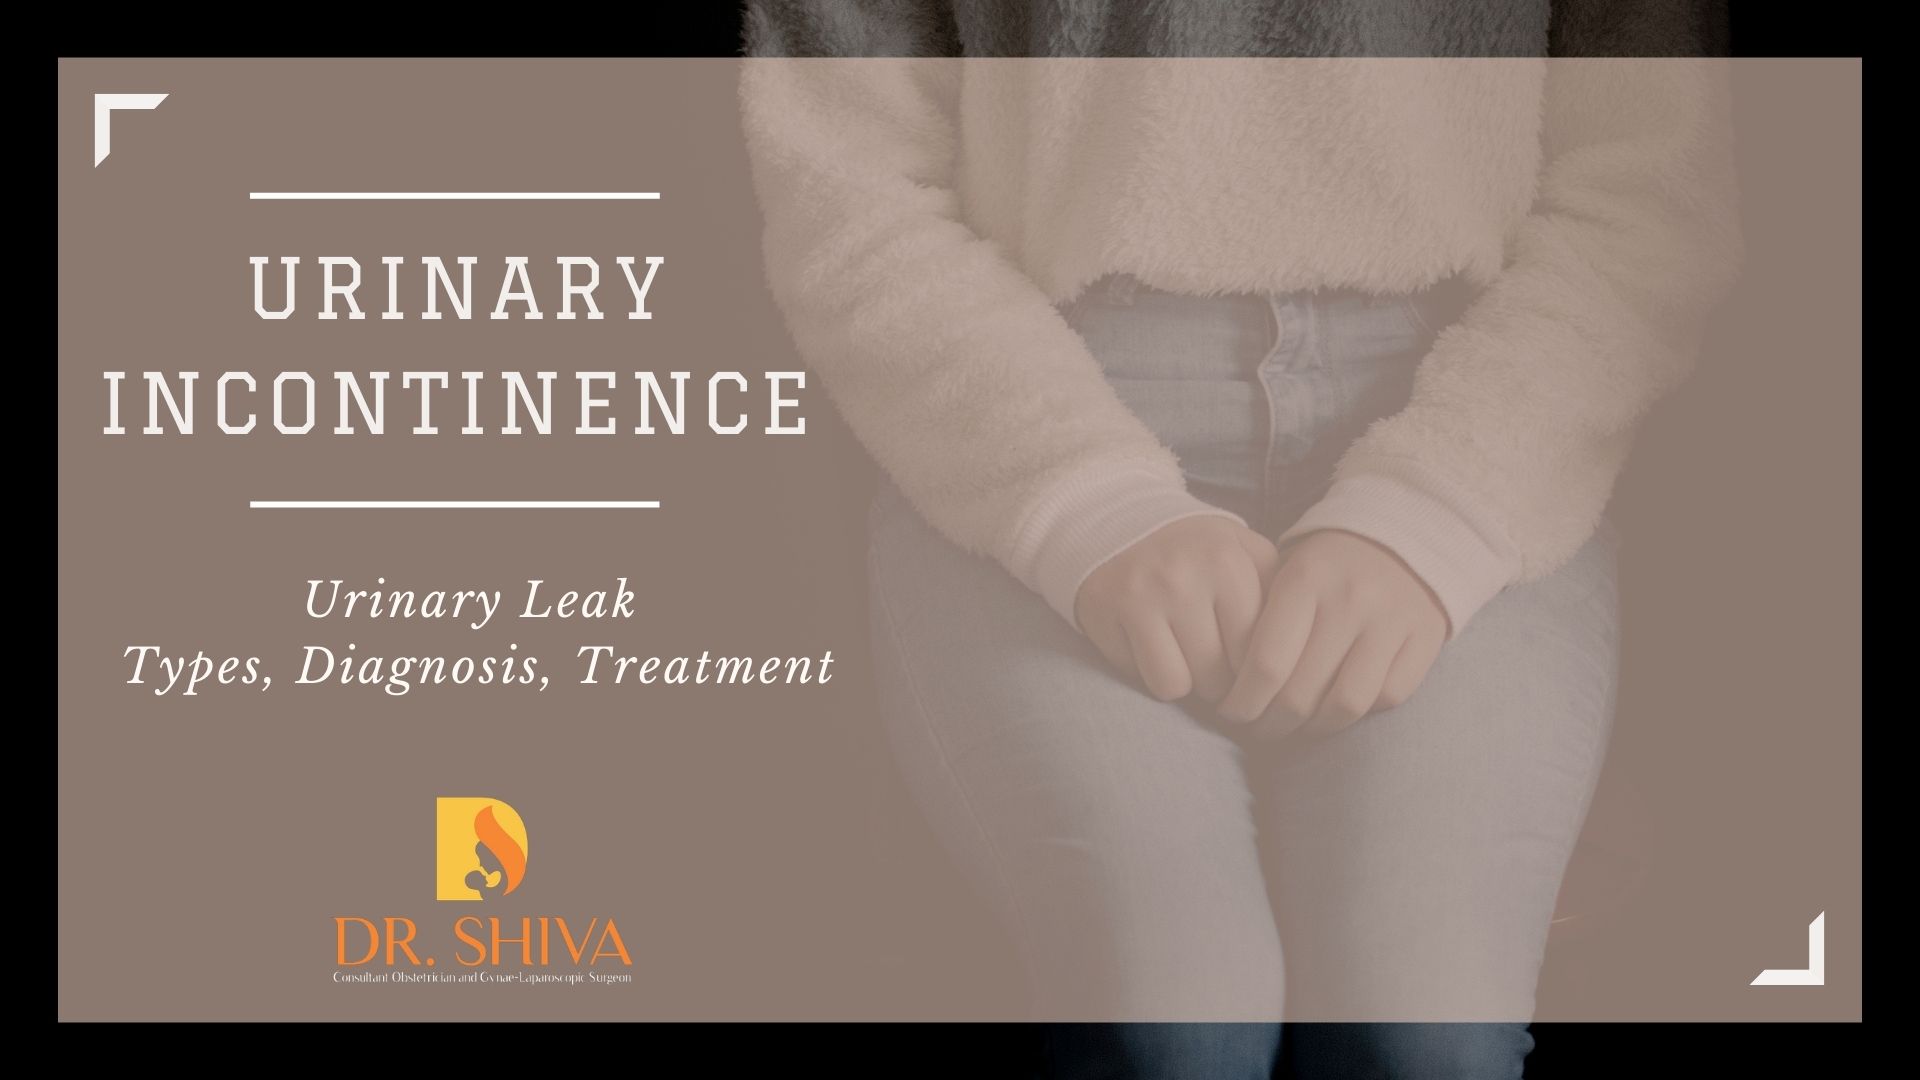 Urinary incontinence – Urinary Leak